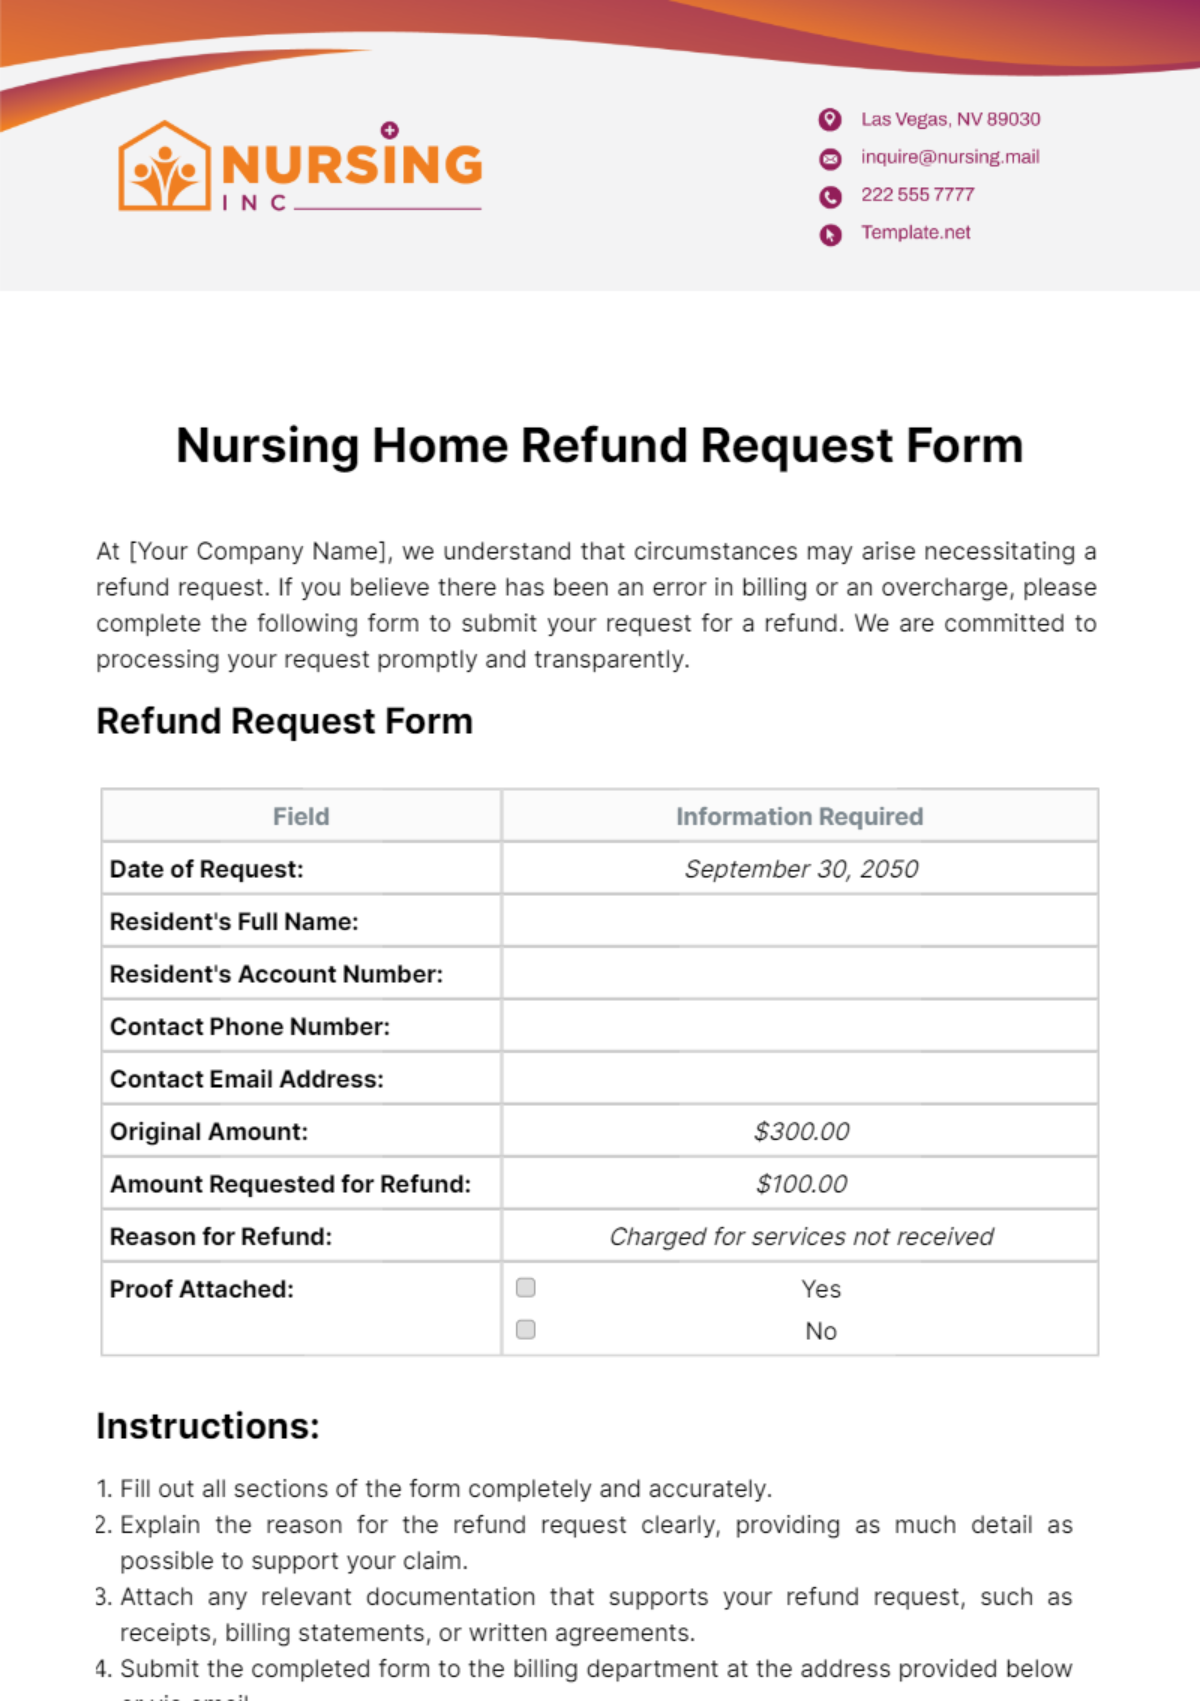 Free Nursing Home Refund Request Form Template